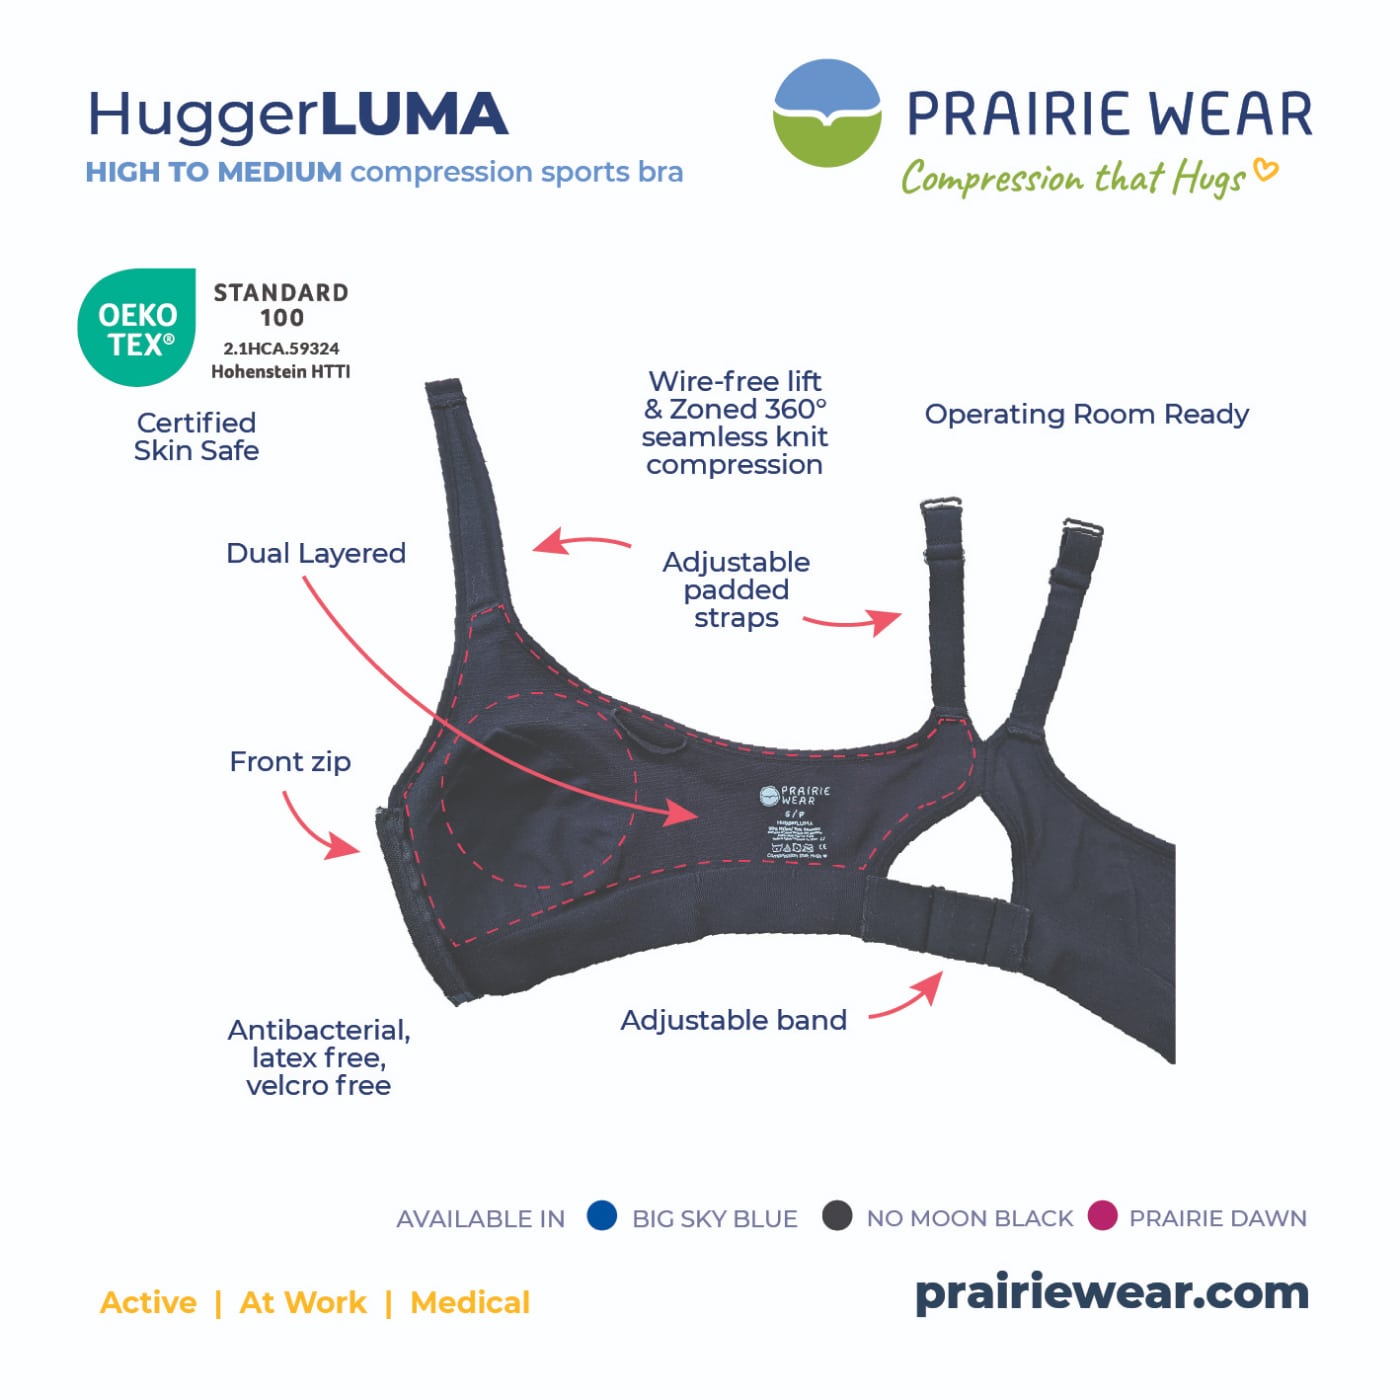 HuggerLUMA – Prairie Wear